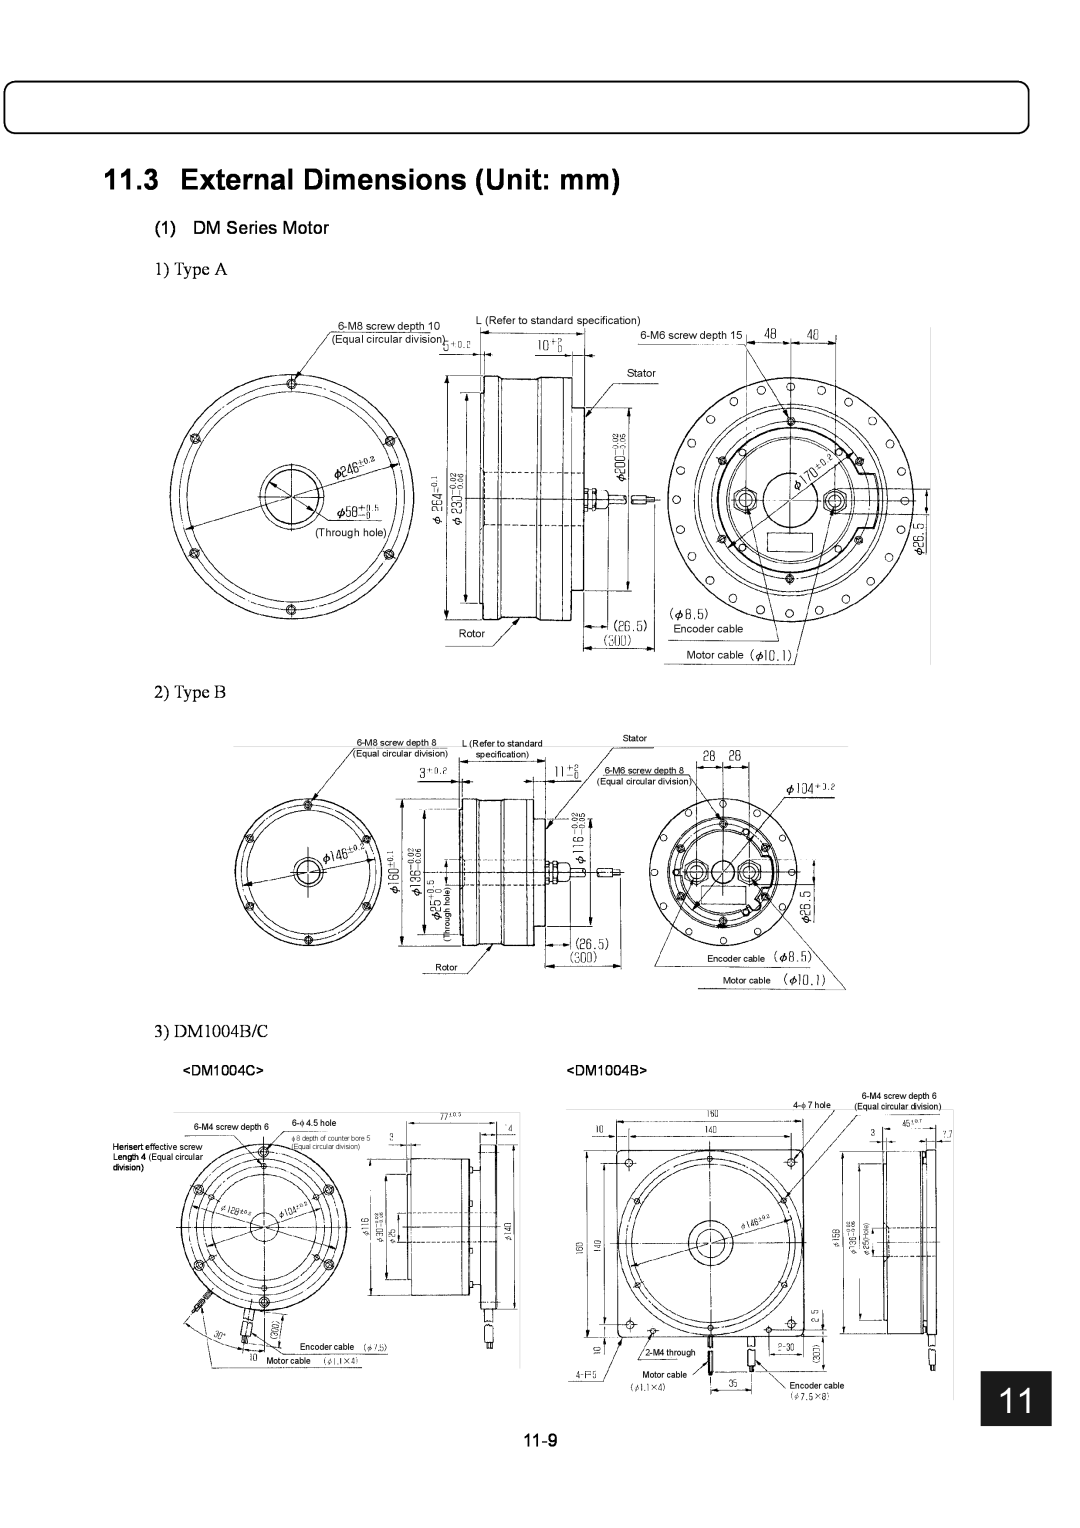 Parker Hannifin G2 manual External Dimensions Unit mm, DM Series Motor, Type A, Type B, 3 DM1004B/C, 11-9 